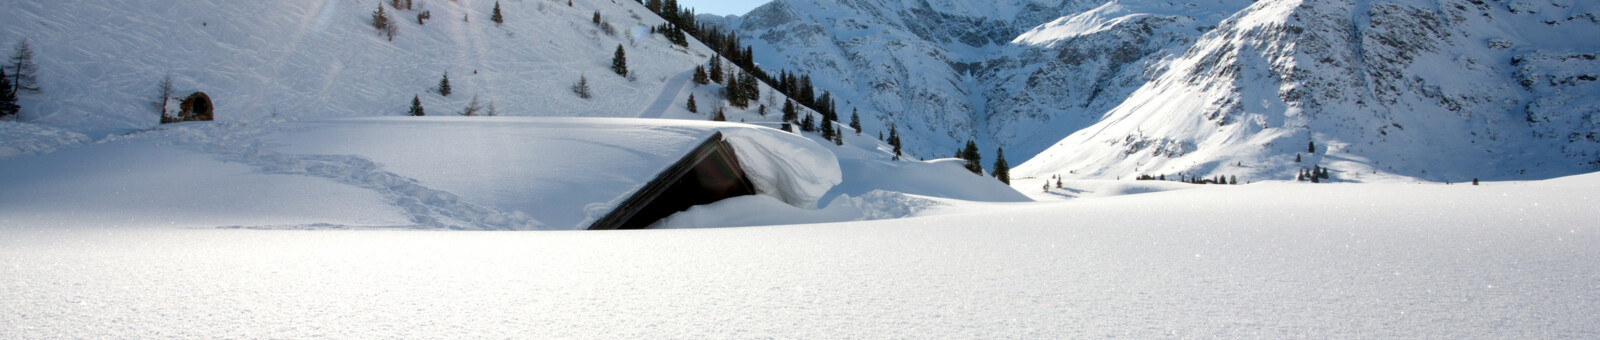     Winter landscape - snow-covered hut 